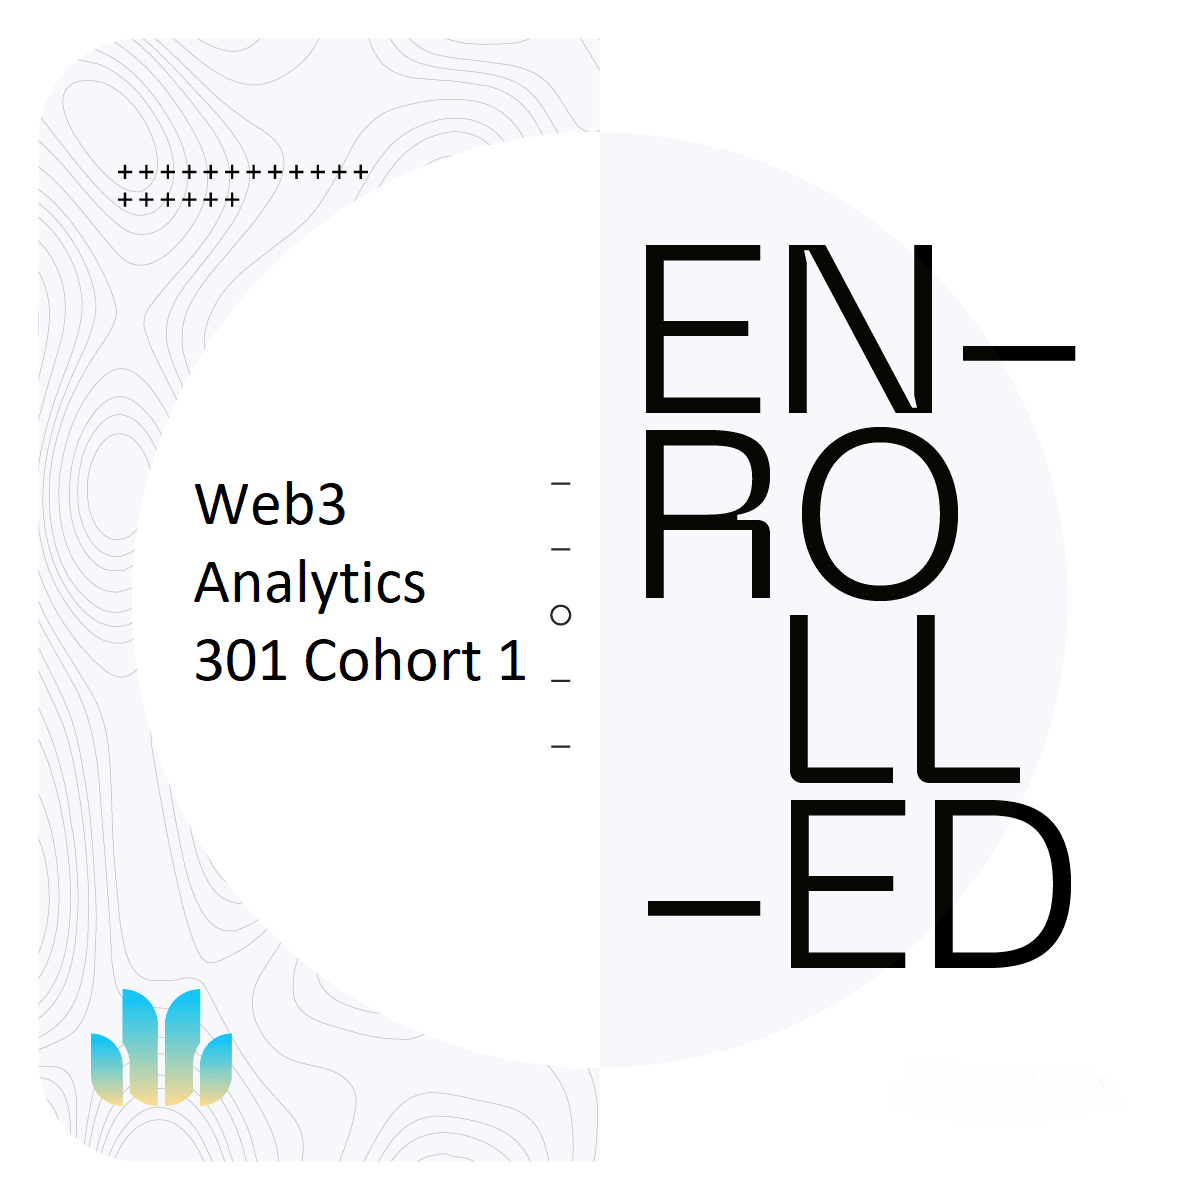 Web3 Analytics 301 Live Course Cohort 1 Enrolled